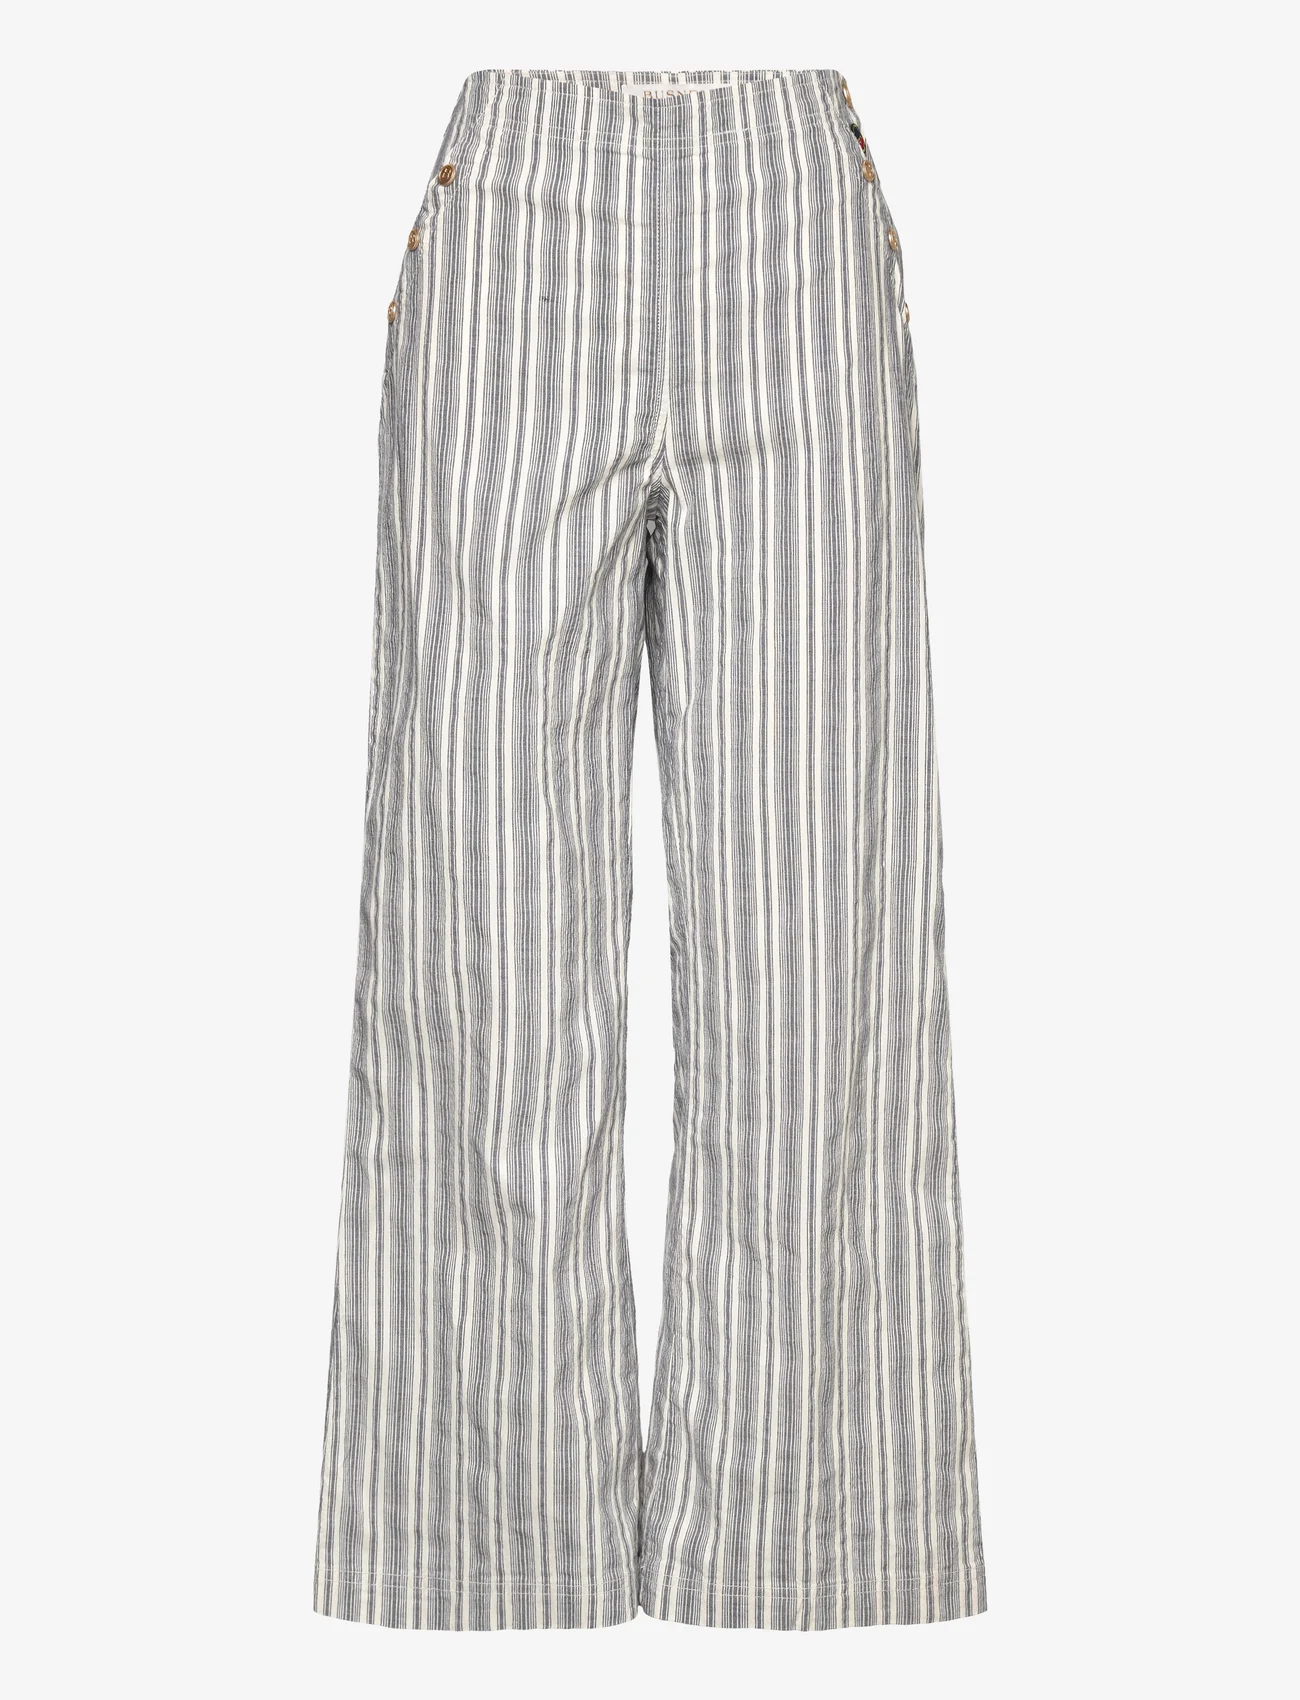 BUSNEL - PETUNIA trousers - vide bukser - ocean blue stripe - 0